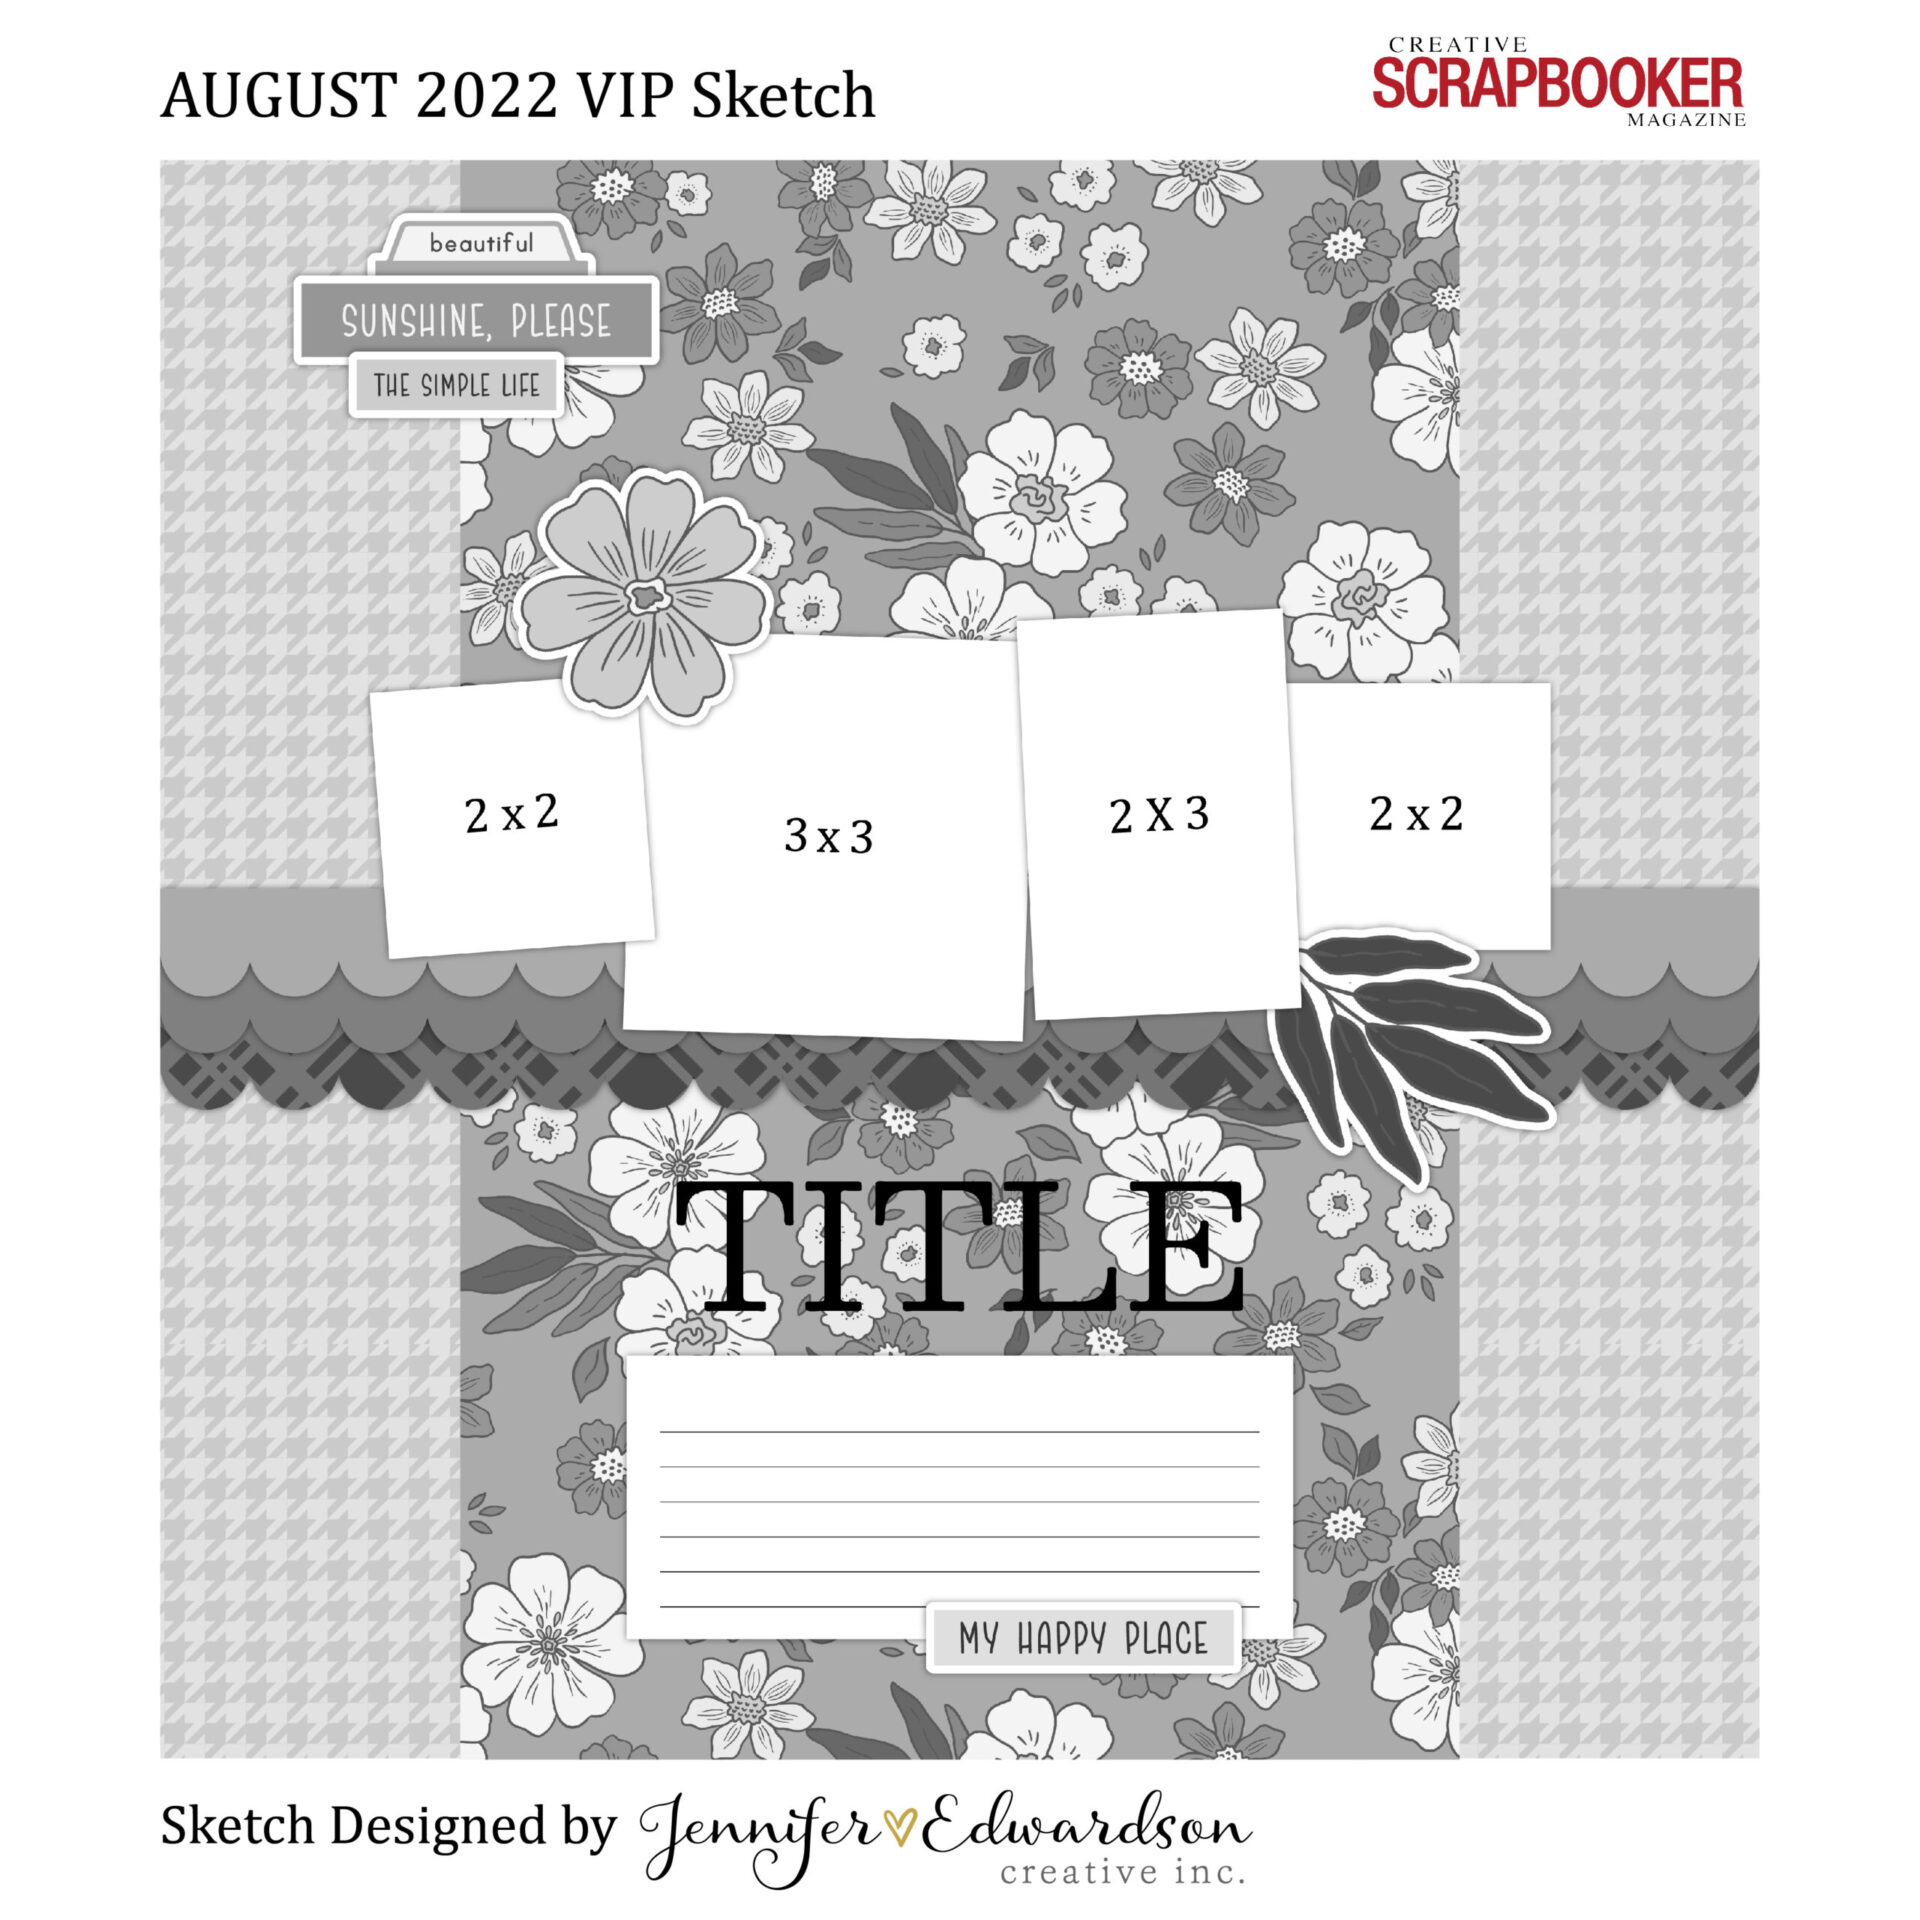 Creative Scrapbooker Magazine August 2022 Monthly Sketch - Jennifer Edwardson Creative Inc